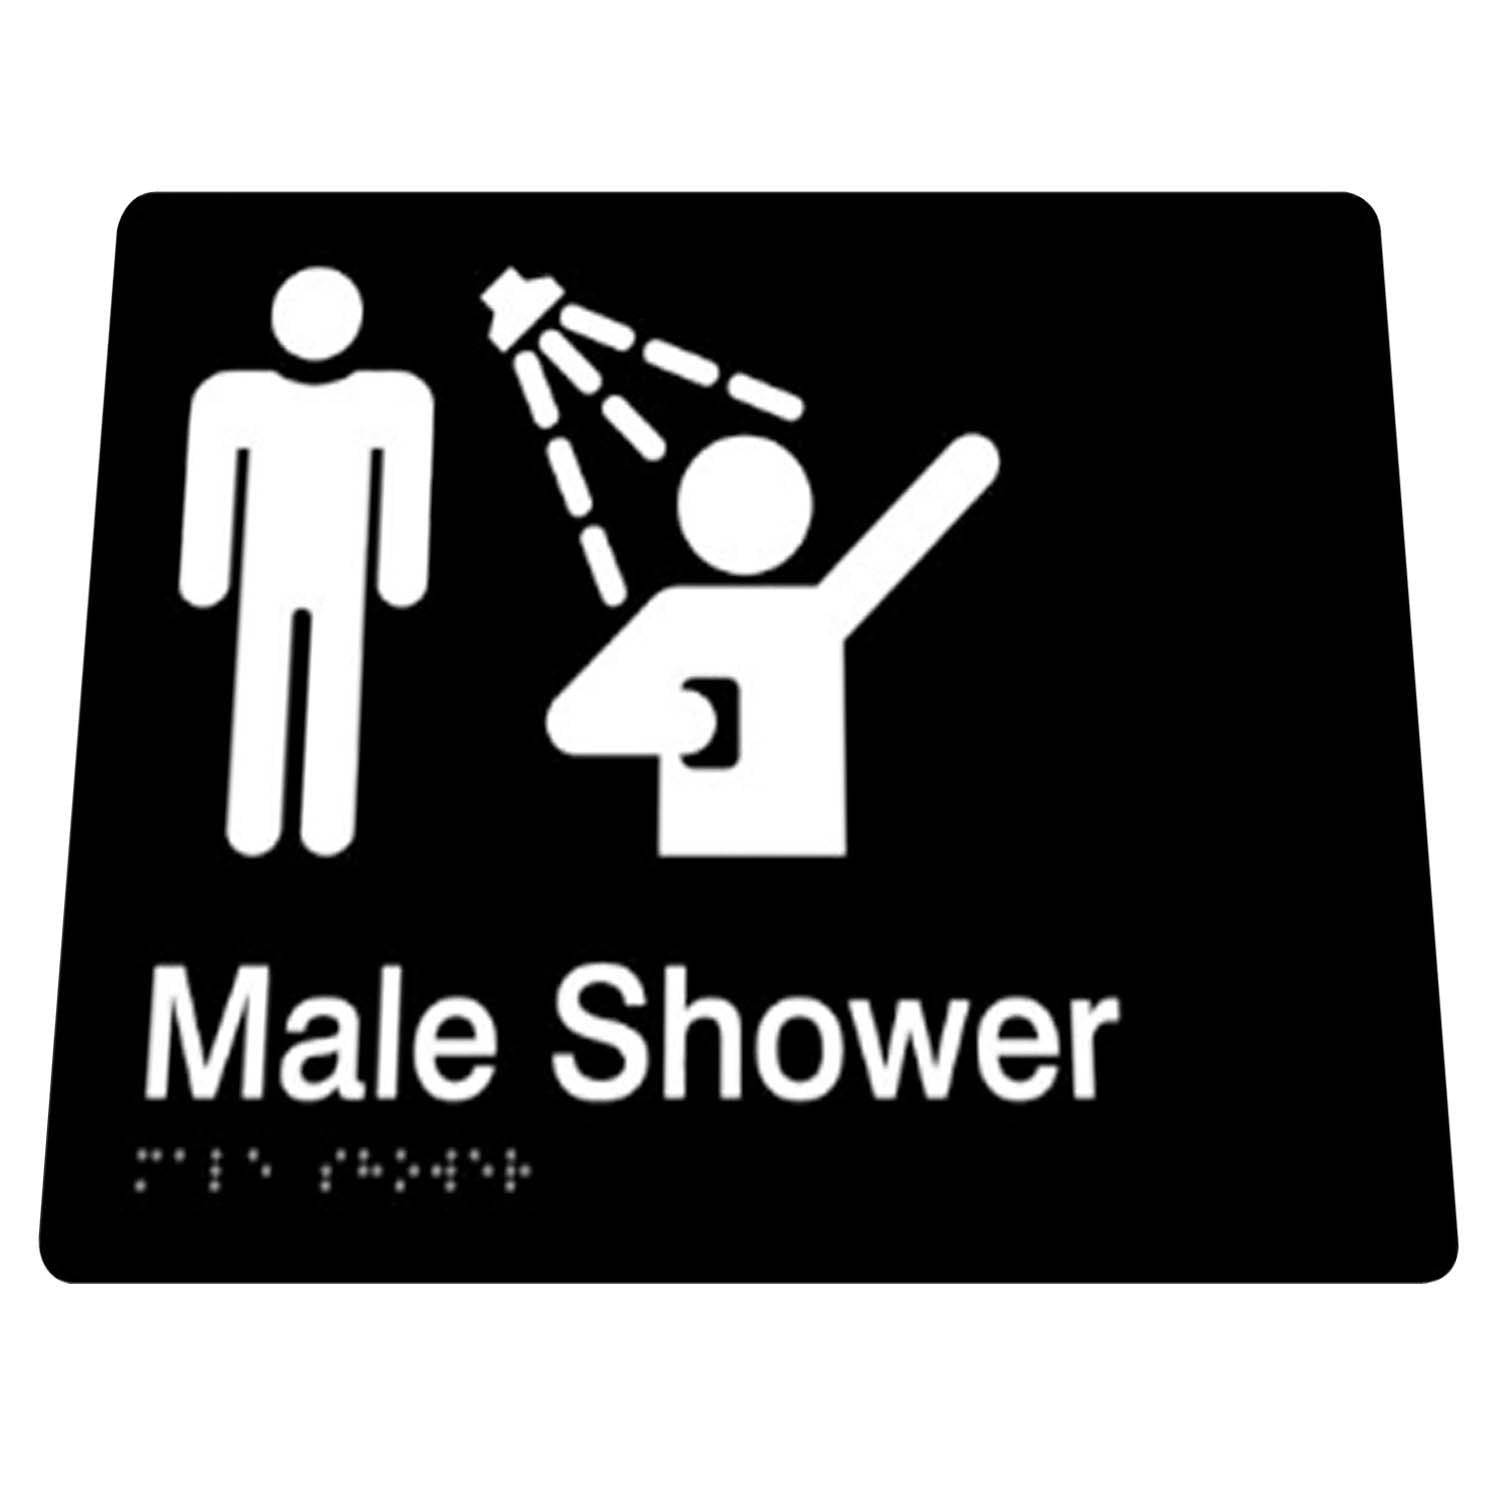 Male Shower Braille Sign Black